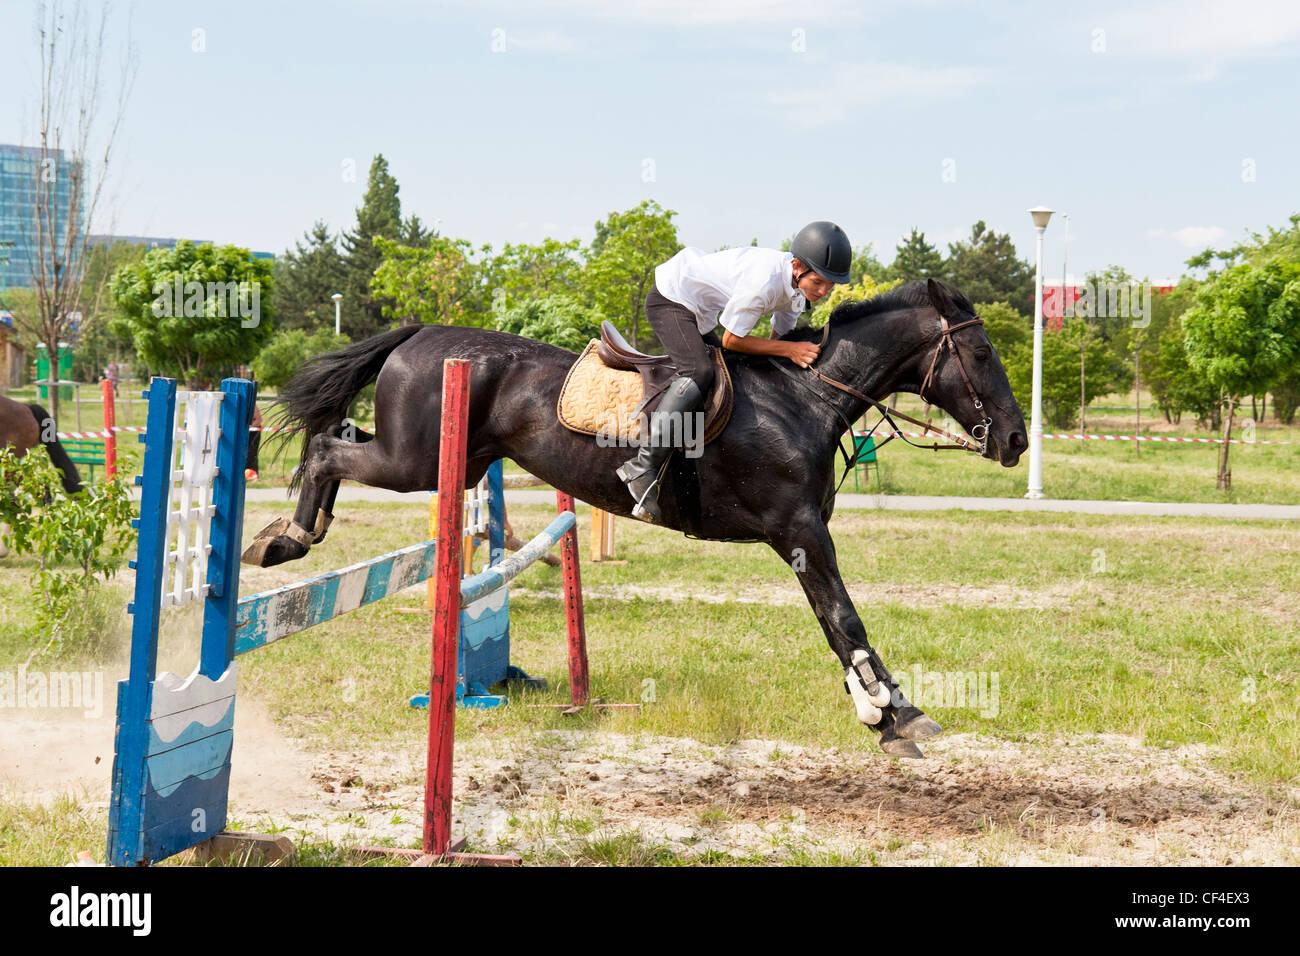 Jockey on black horse jumping in a public jump show. Stock Photo